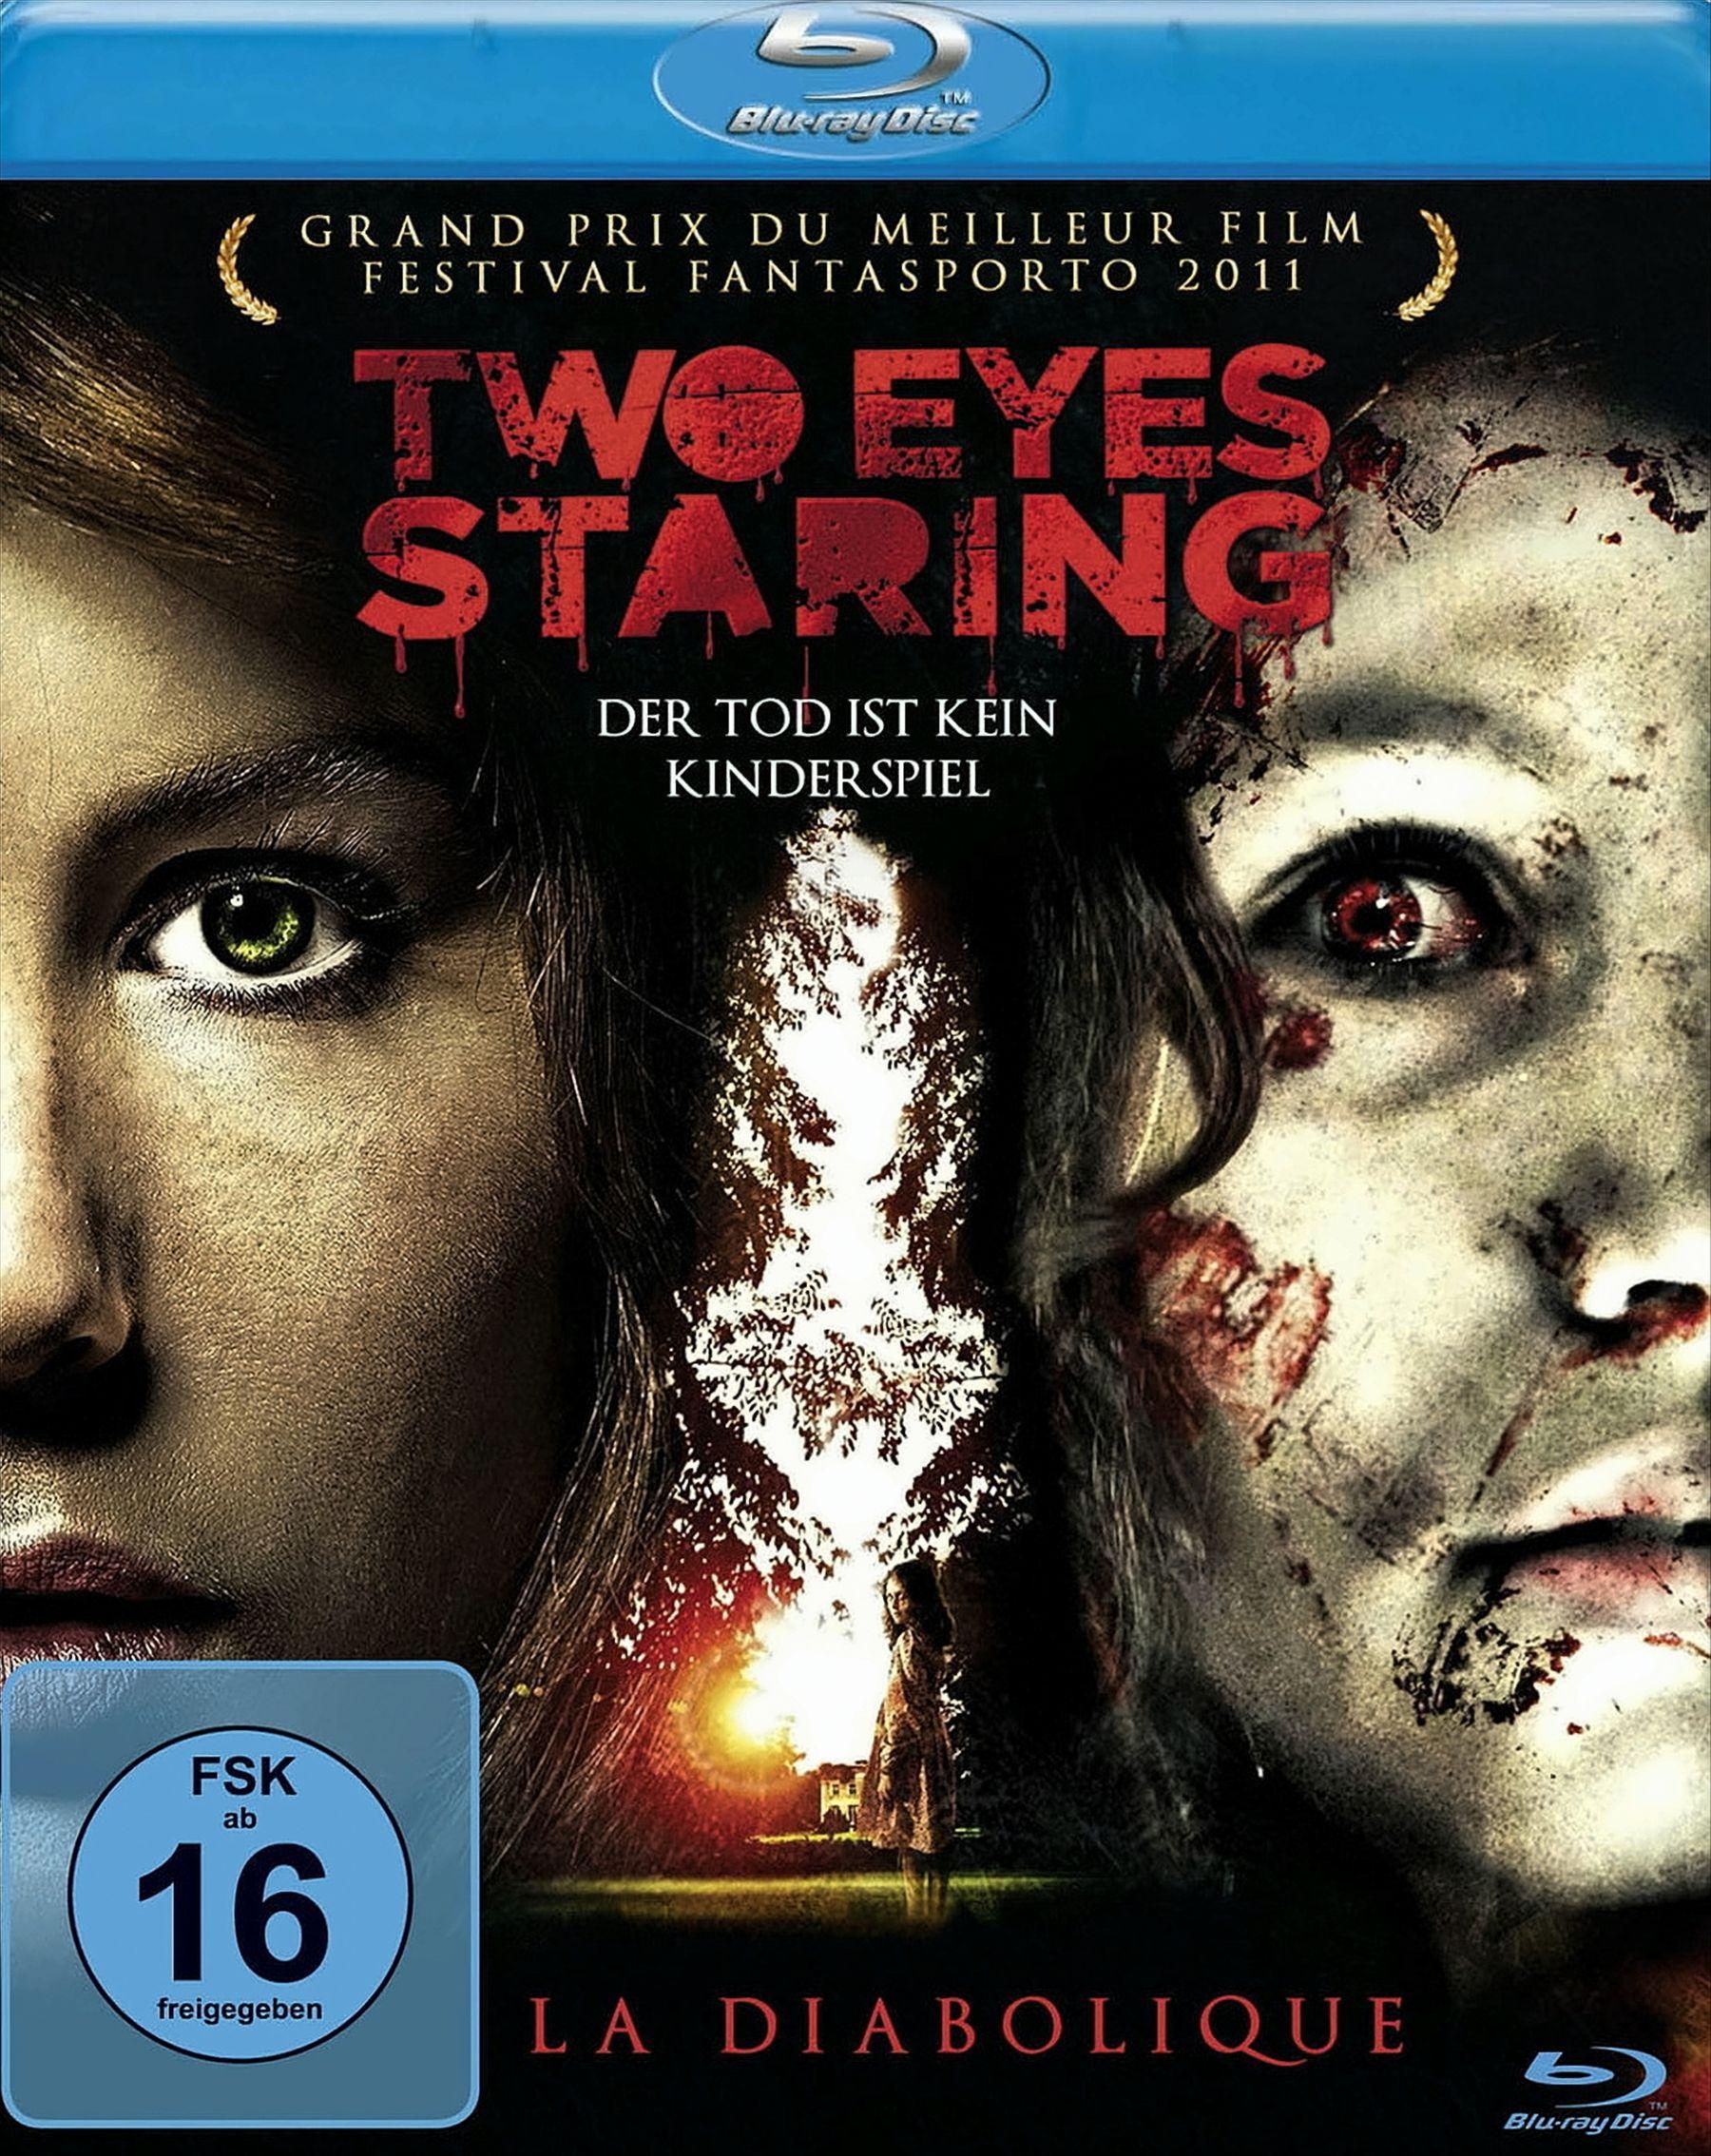 Two Eyes Staring - Der Tod ist kein Blu-ray Kinderspiel